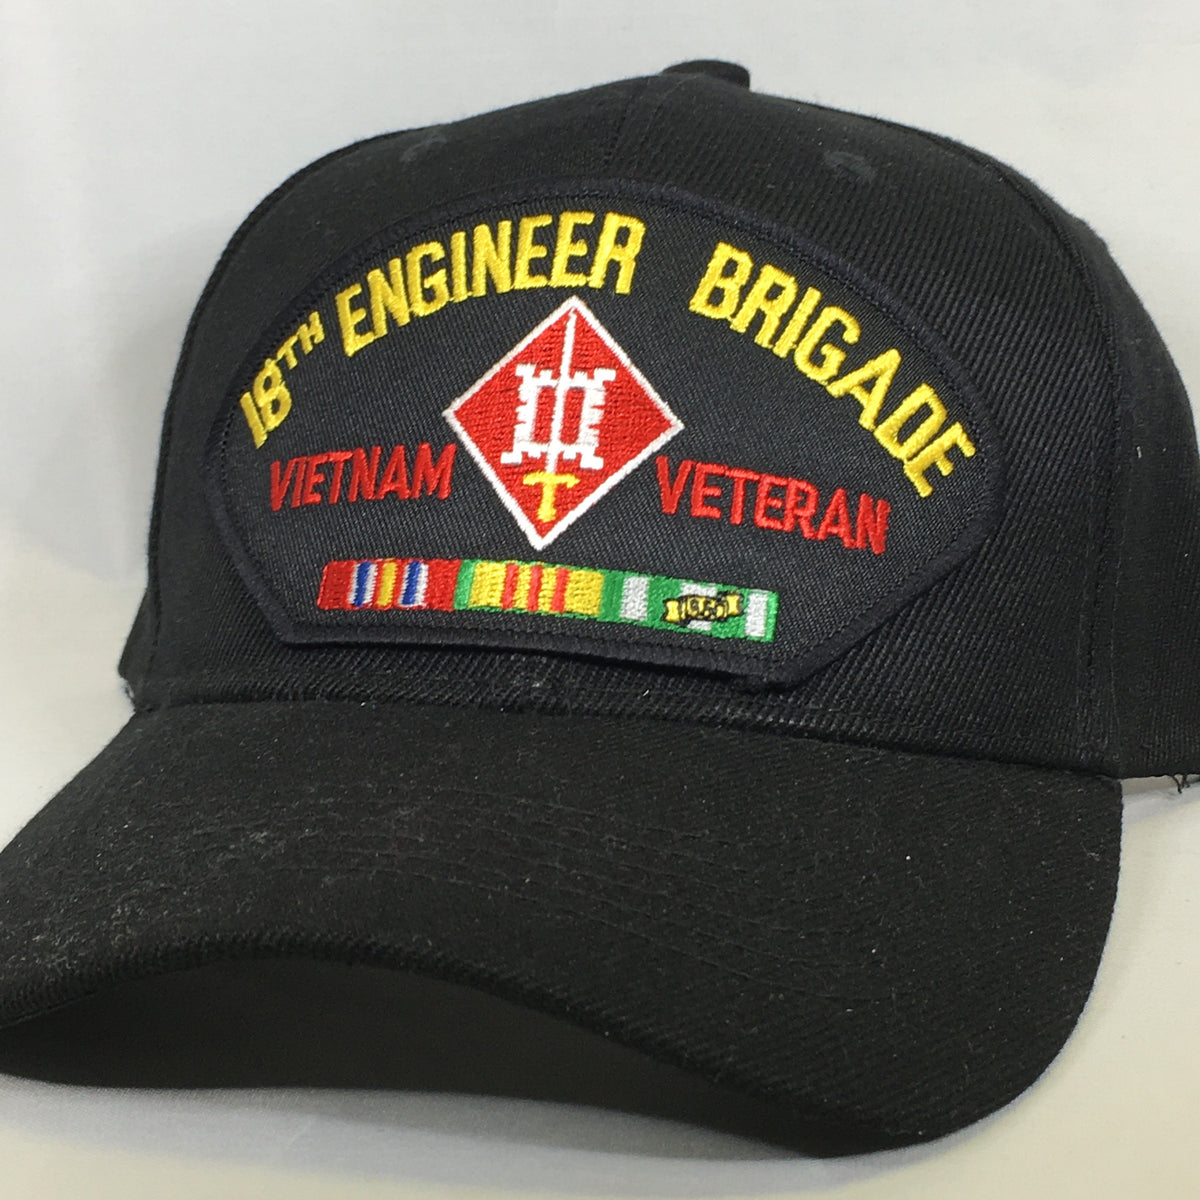 18th Engineer Brigade Vietnam Veteran Cap